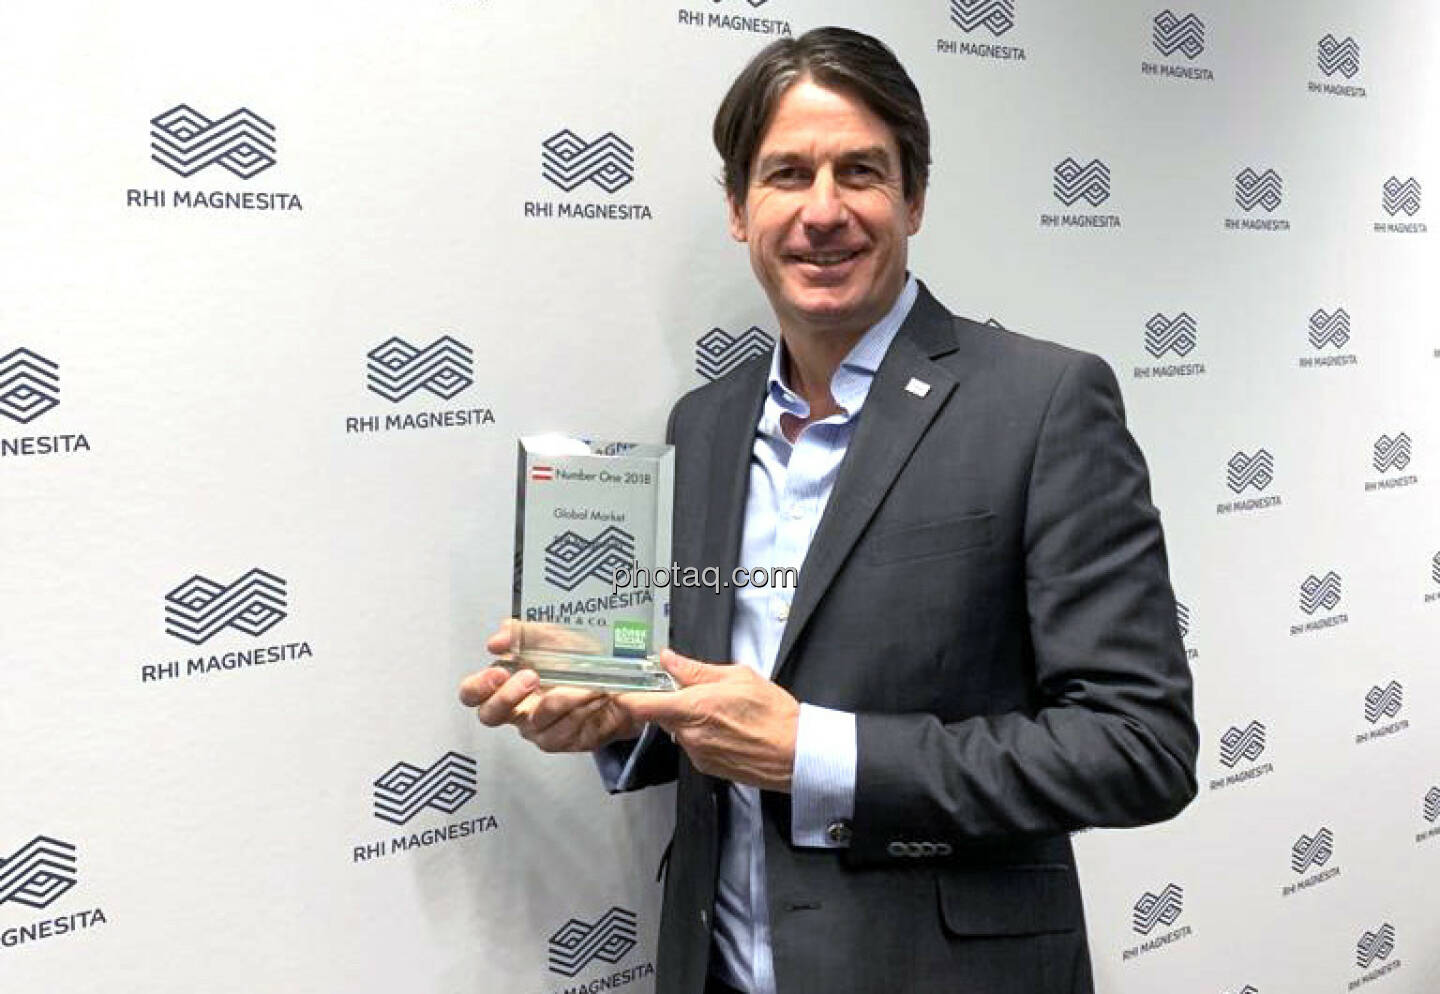 Stefan Borgas (RHI Magnesita) - Number One Awards 2018 - Global Market RHI Magnesita